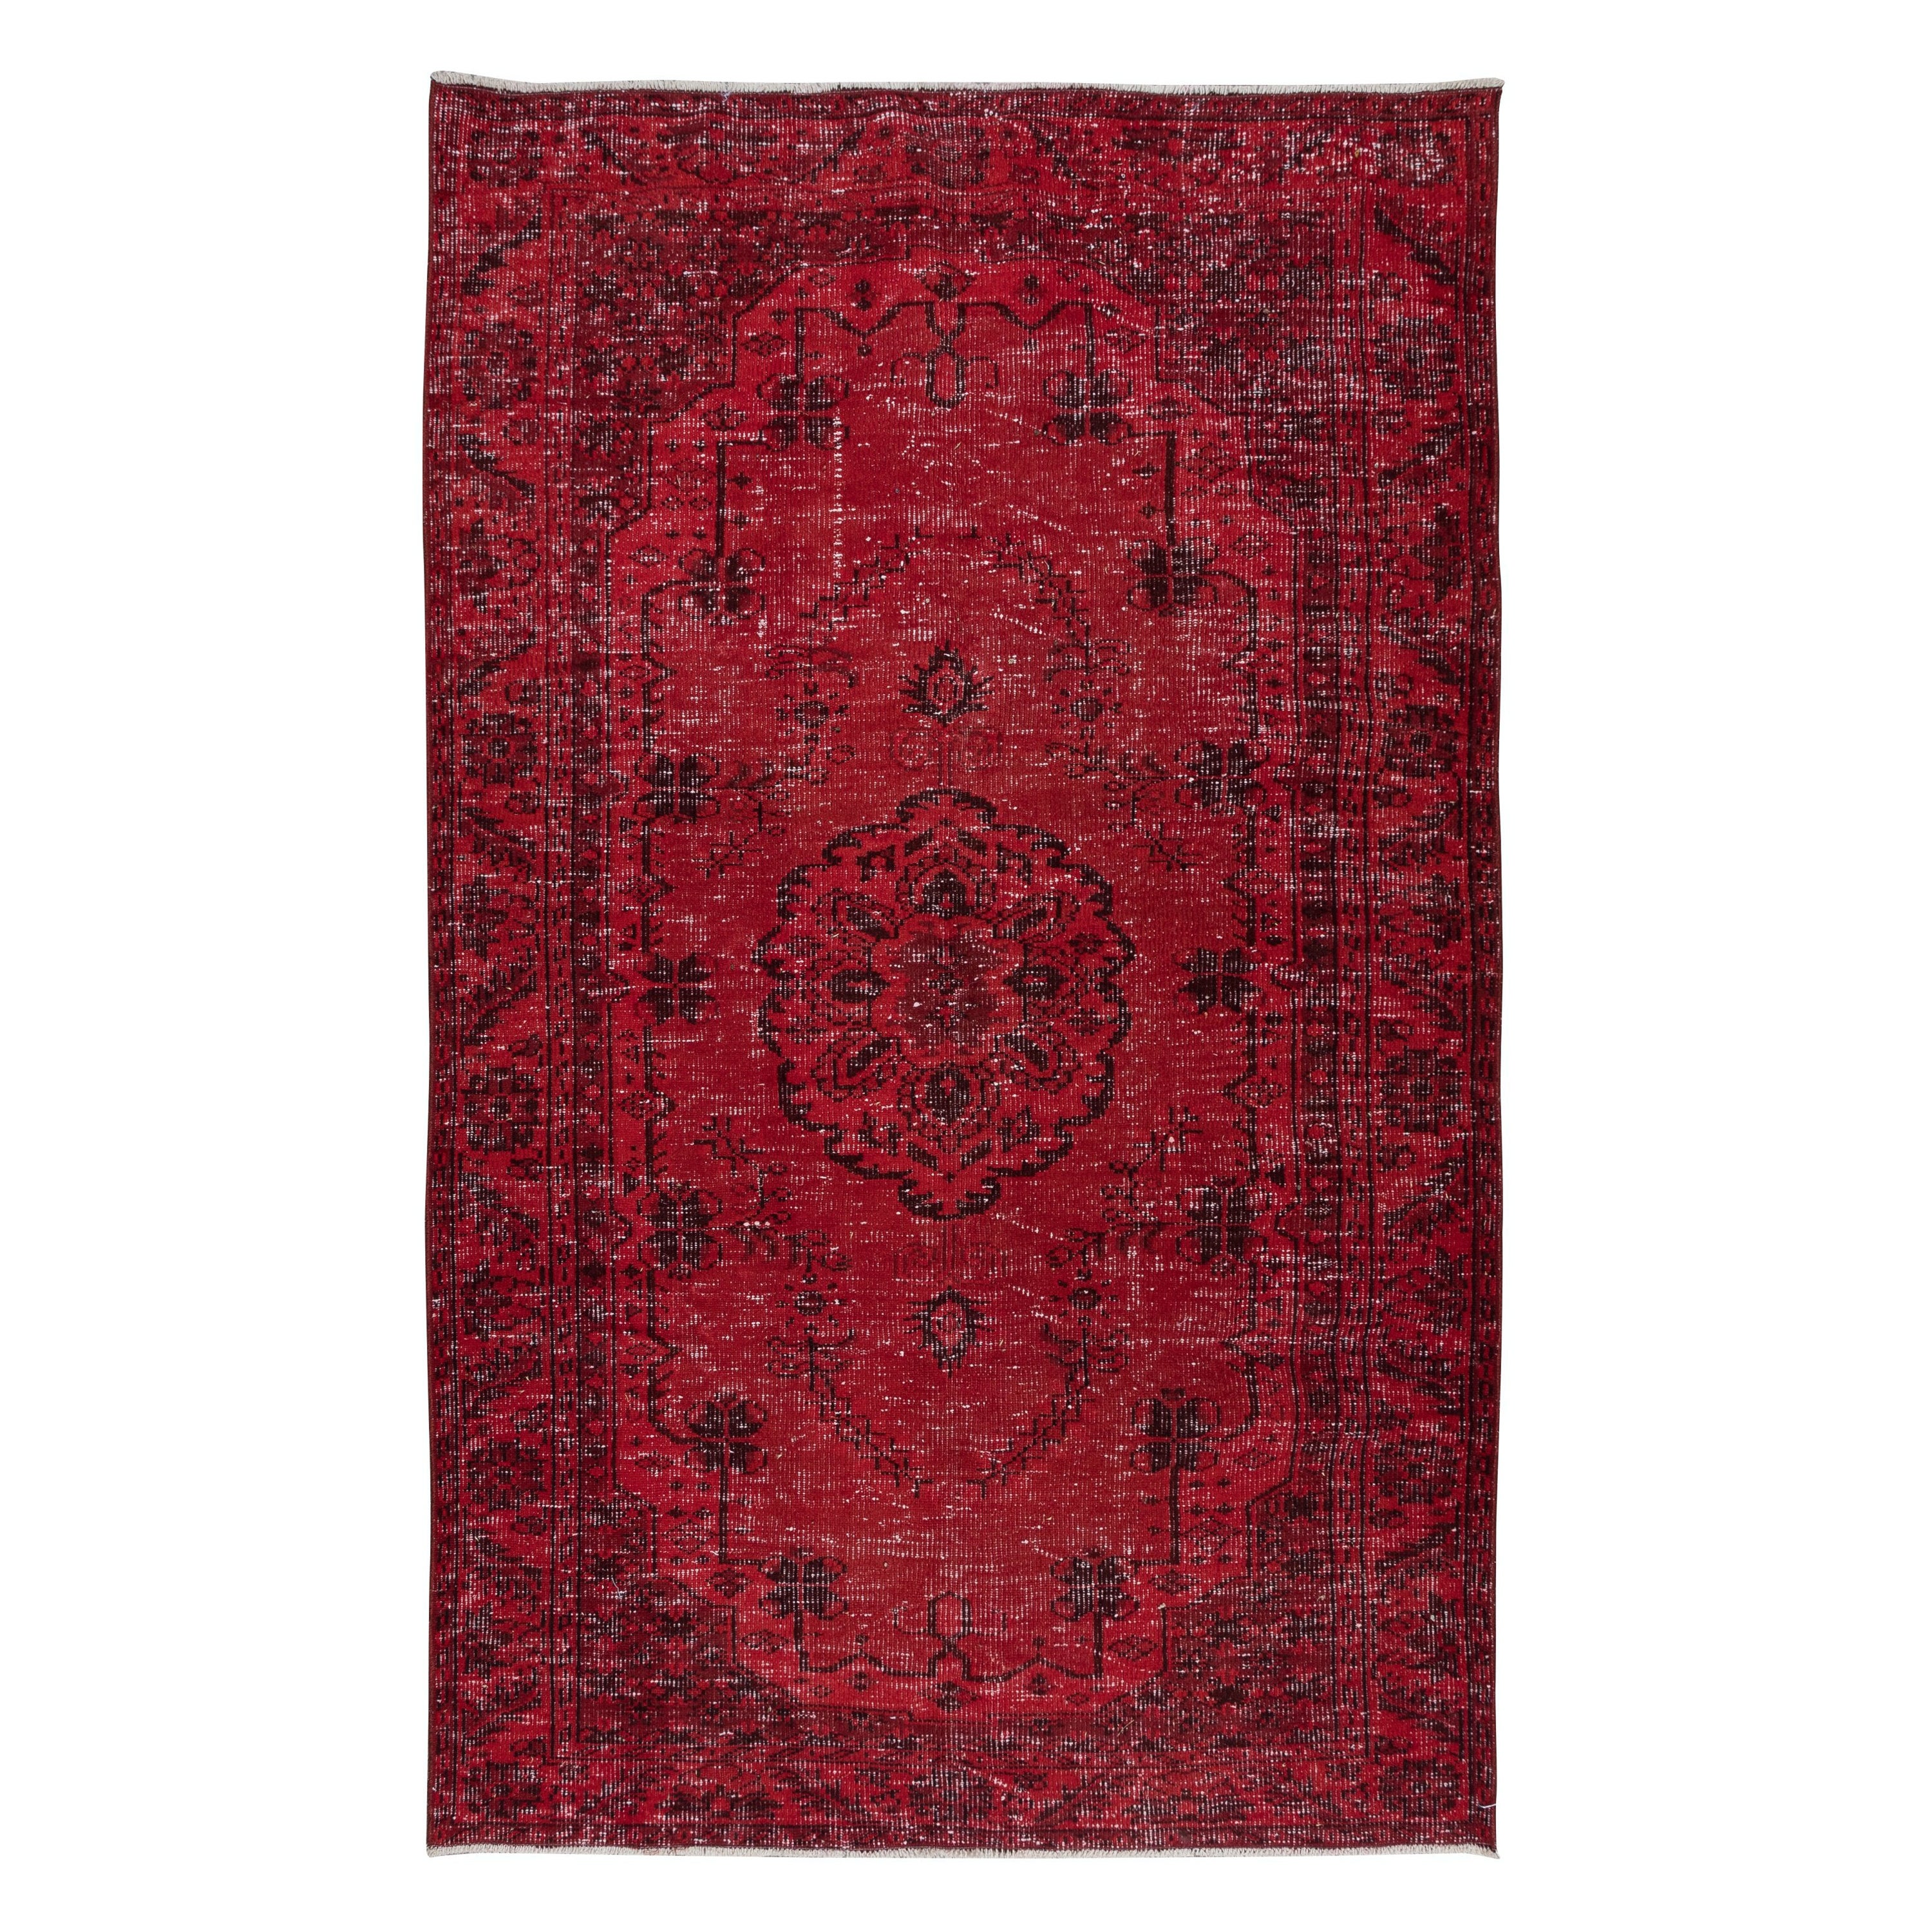 5.6x9 Ft Modern & Contemporary Rug in Dark Red, Handmade Turkish Wool Carpet For Sale